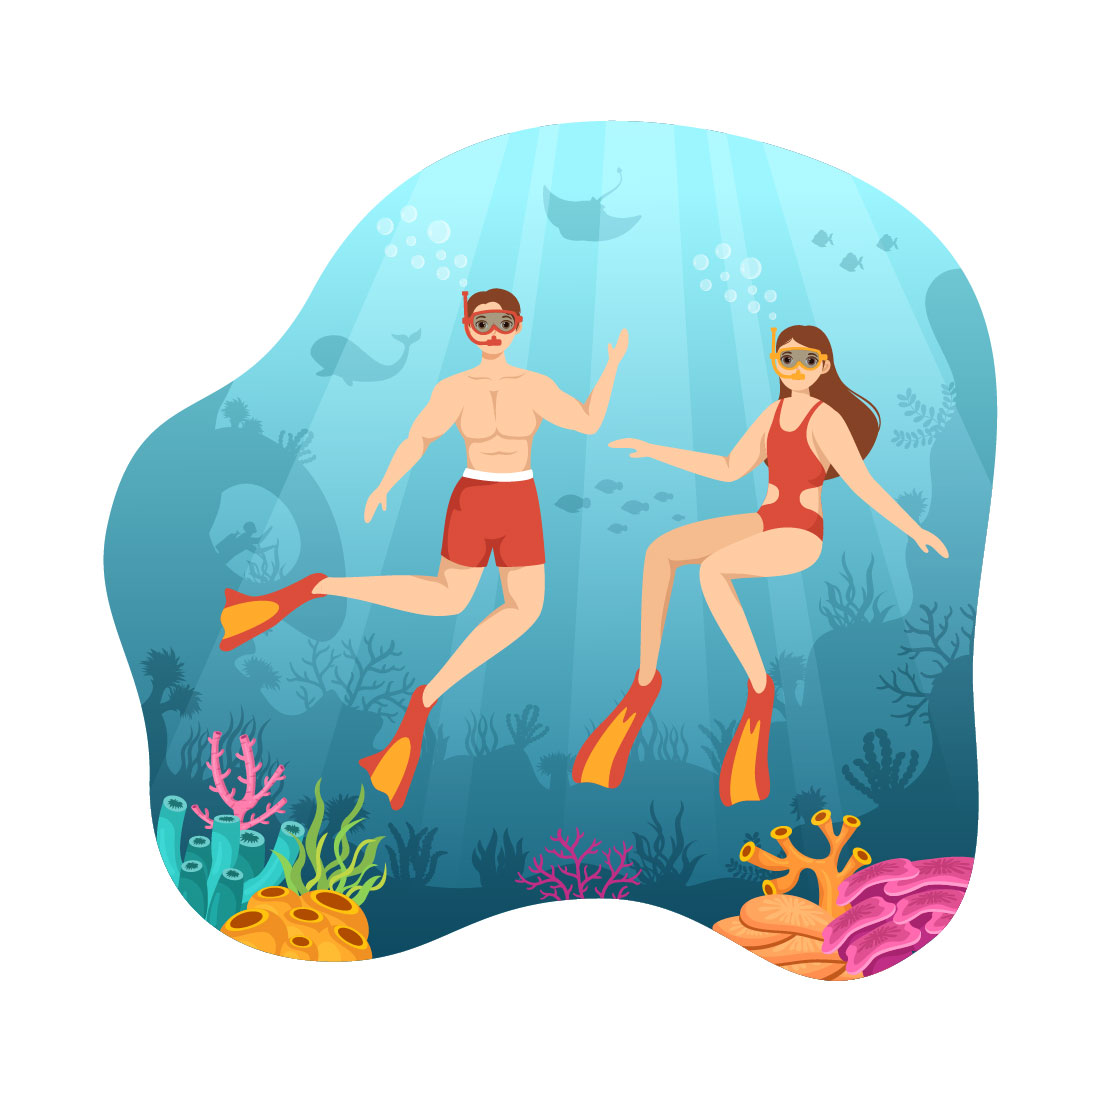 10 Snorkeling Design Illustration main cover.